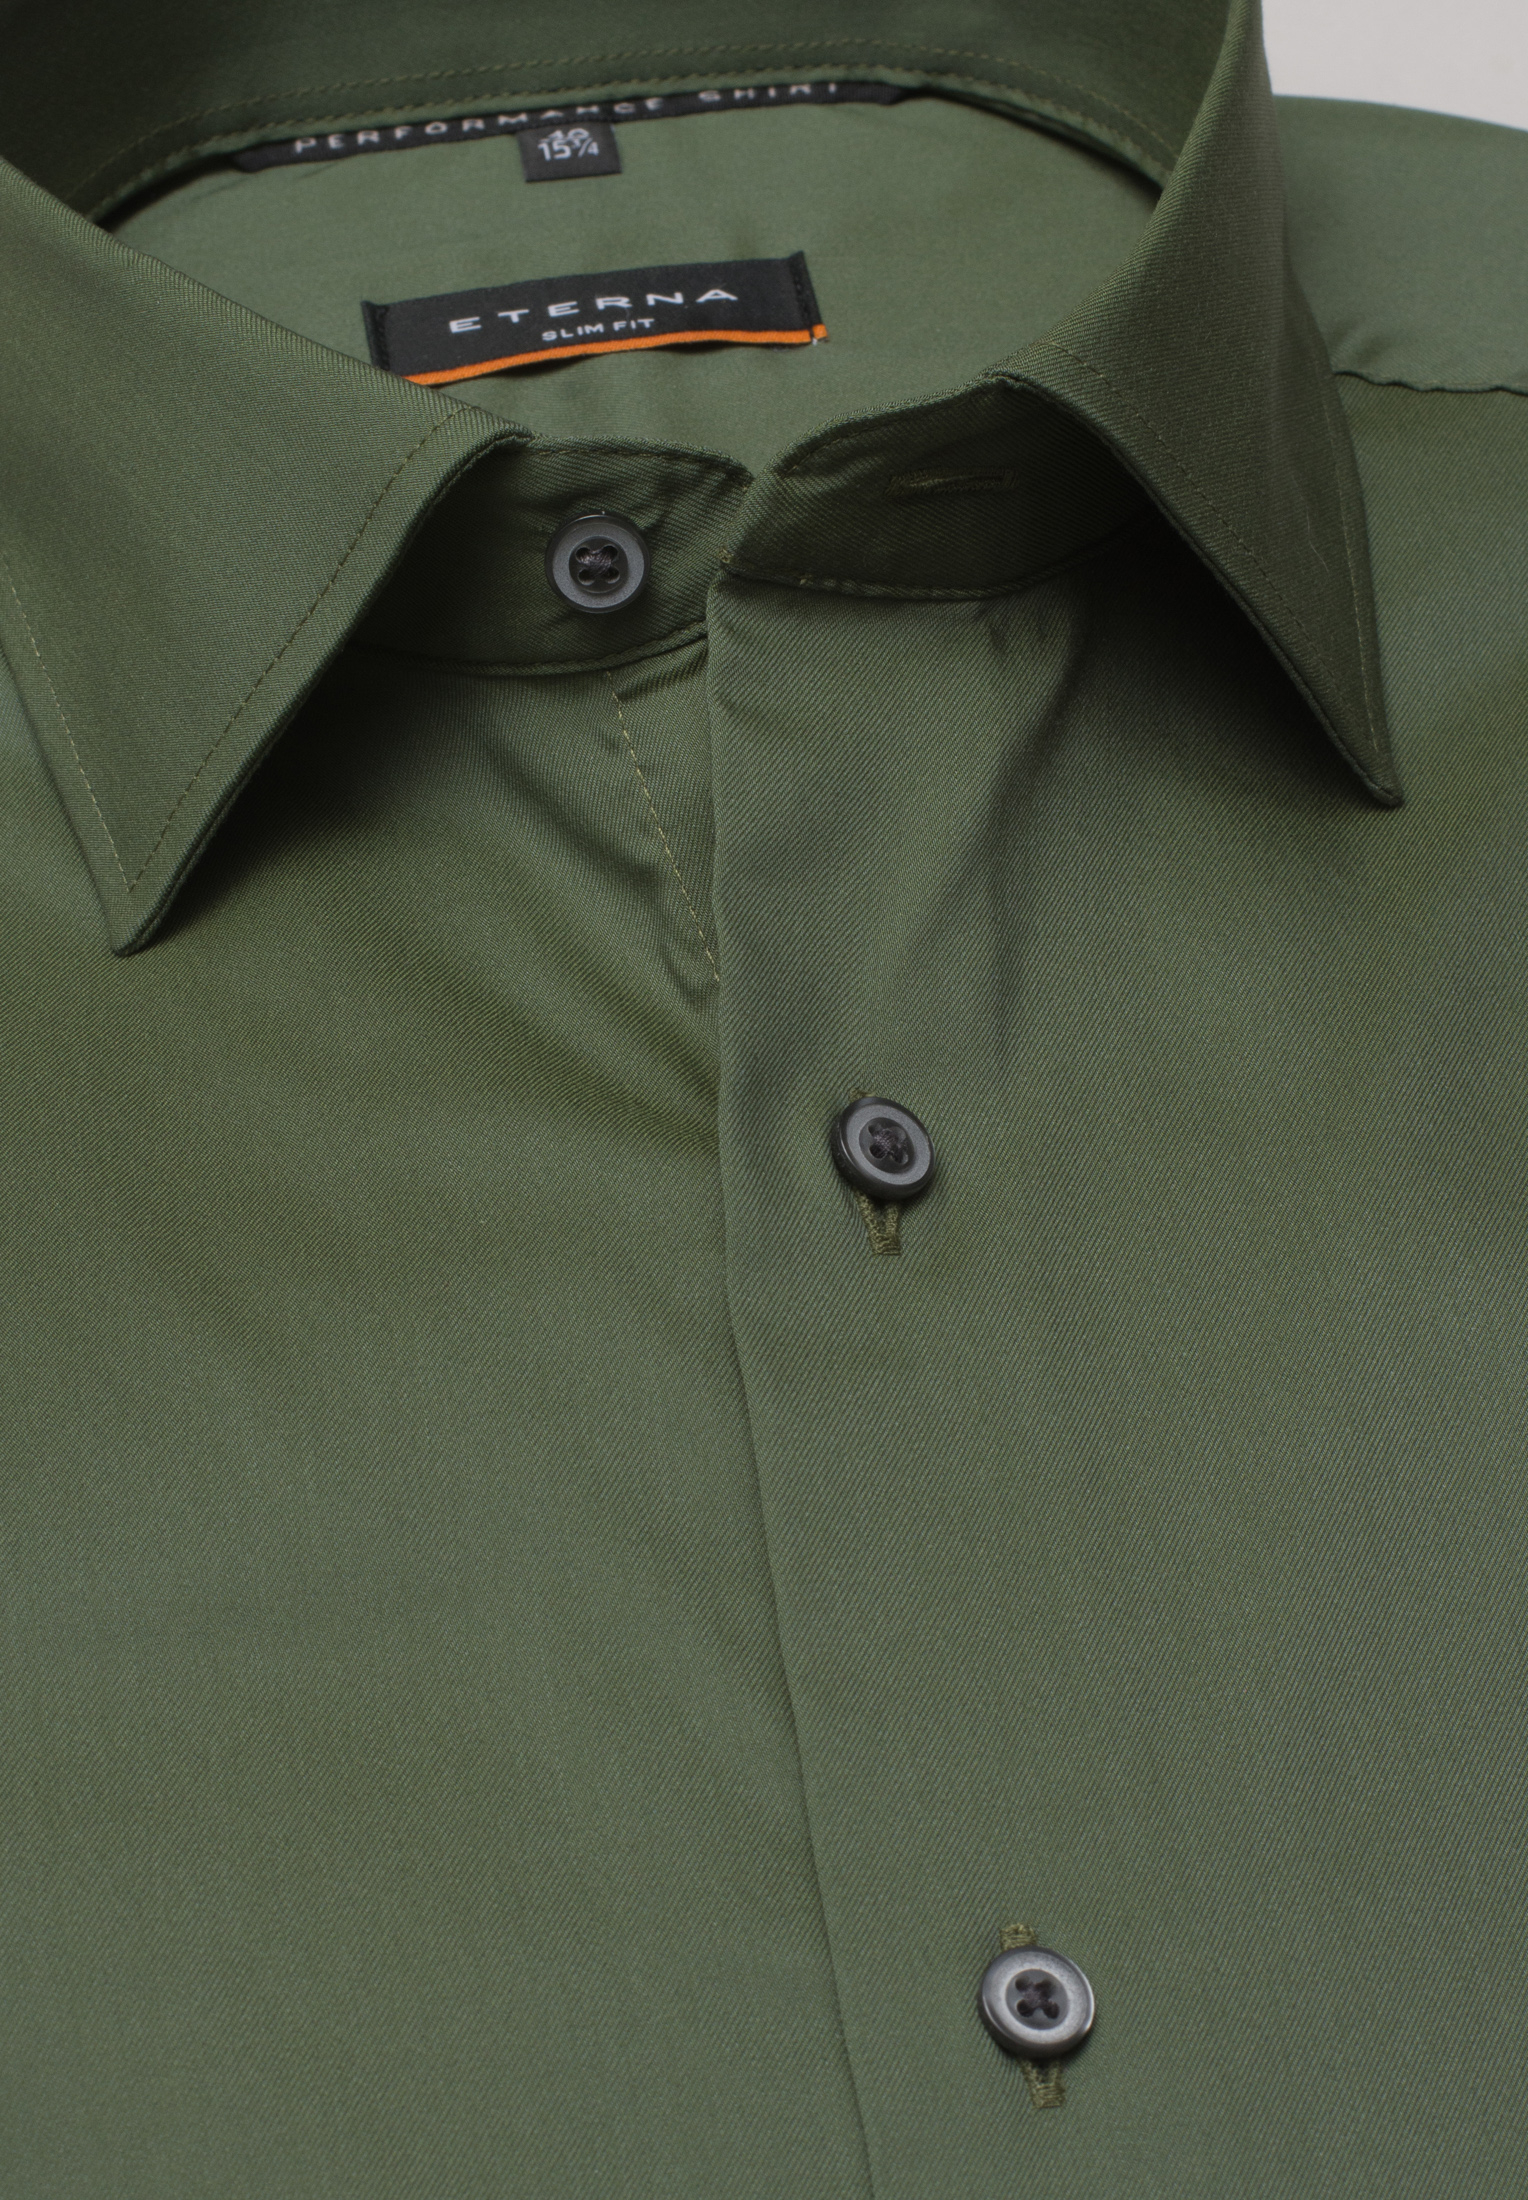 SLIM FIT Performance Shirt in olive unifarben | olive | 41 | Langarm |  1SH02217-04-51-41-1/1